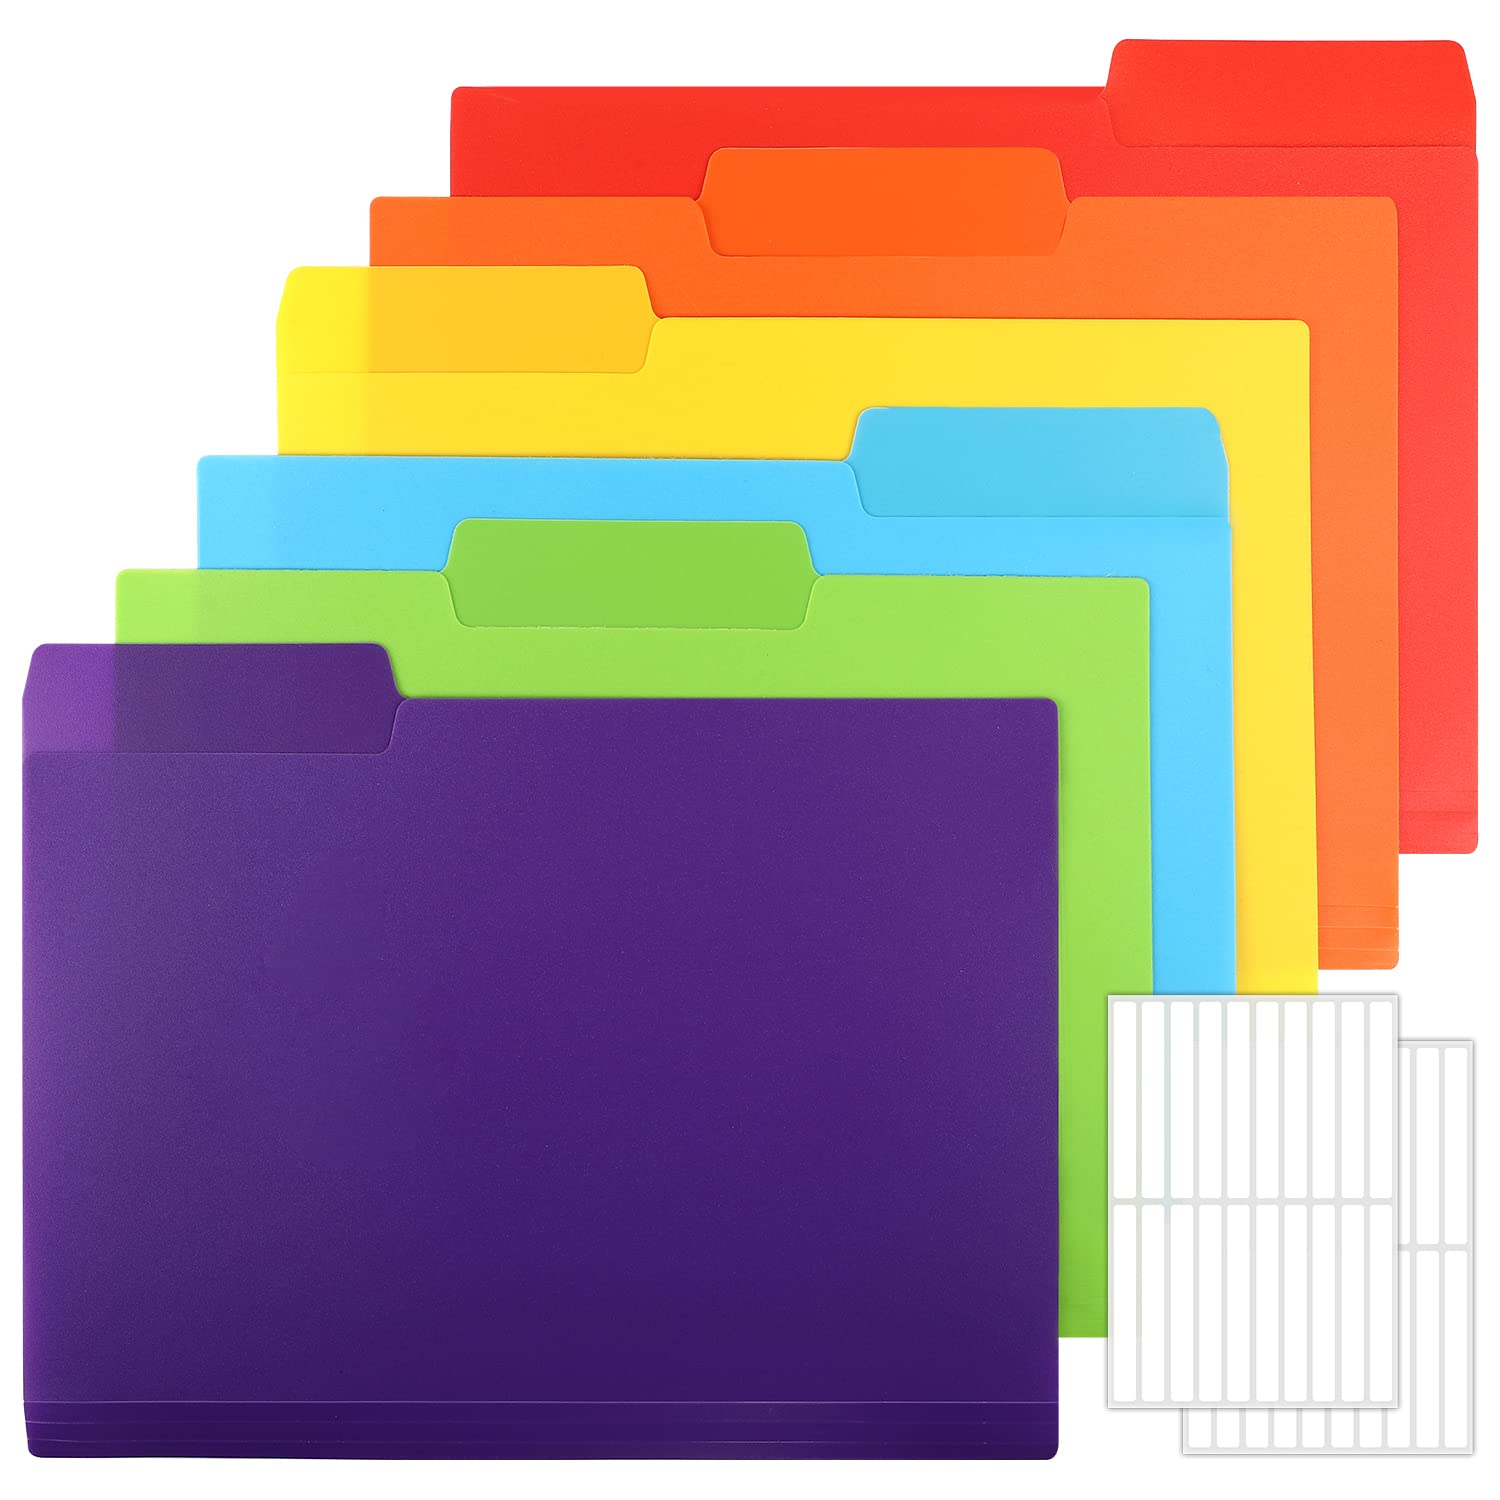 Category tabs or folders